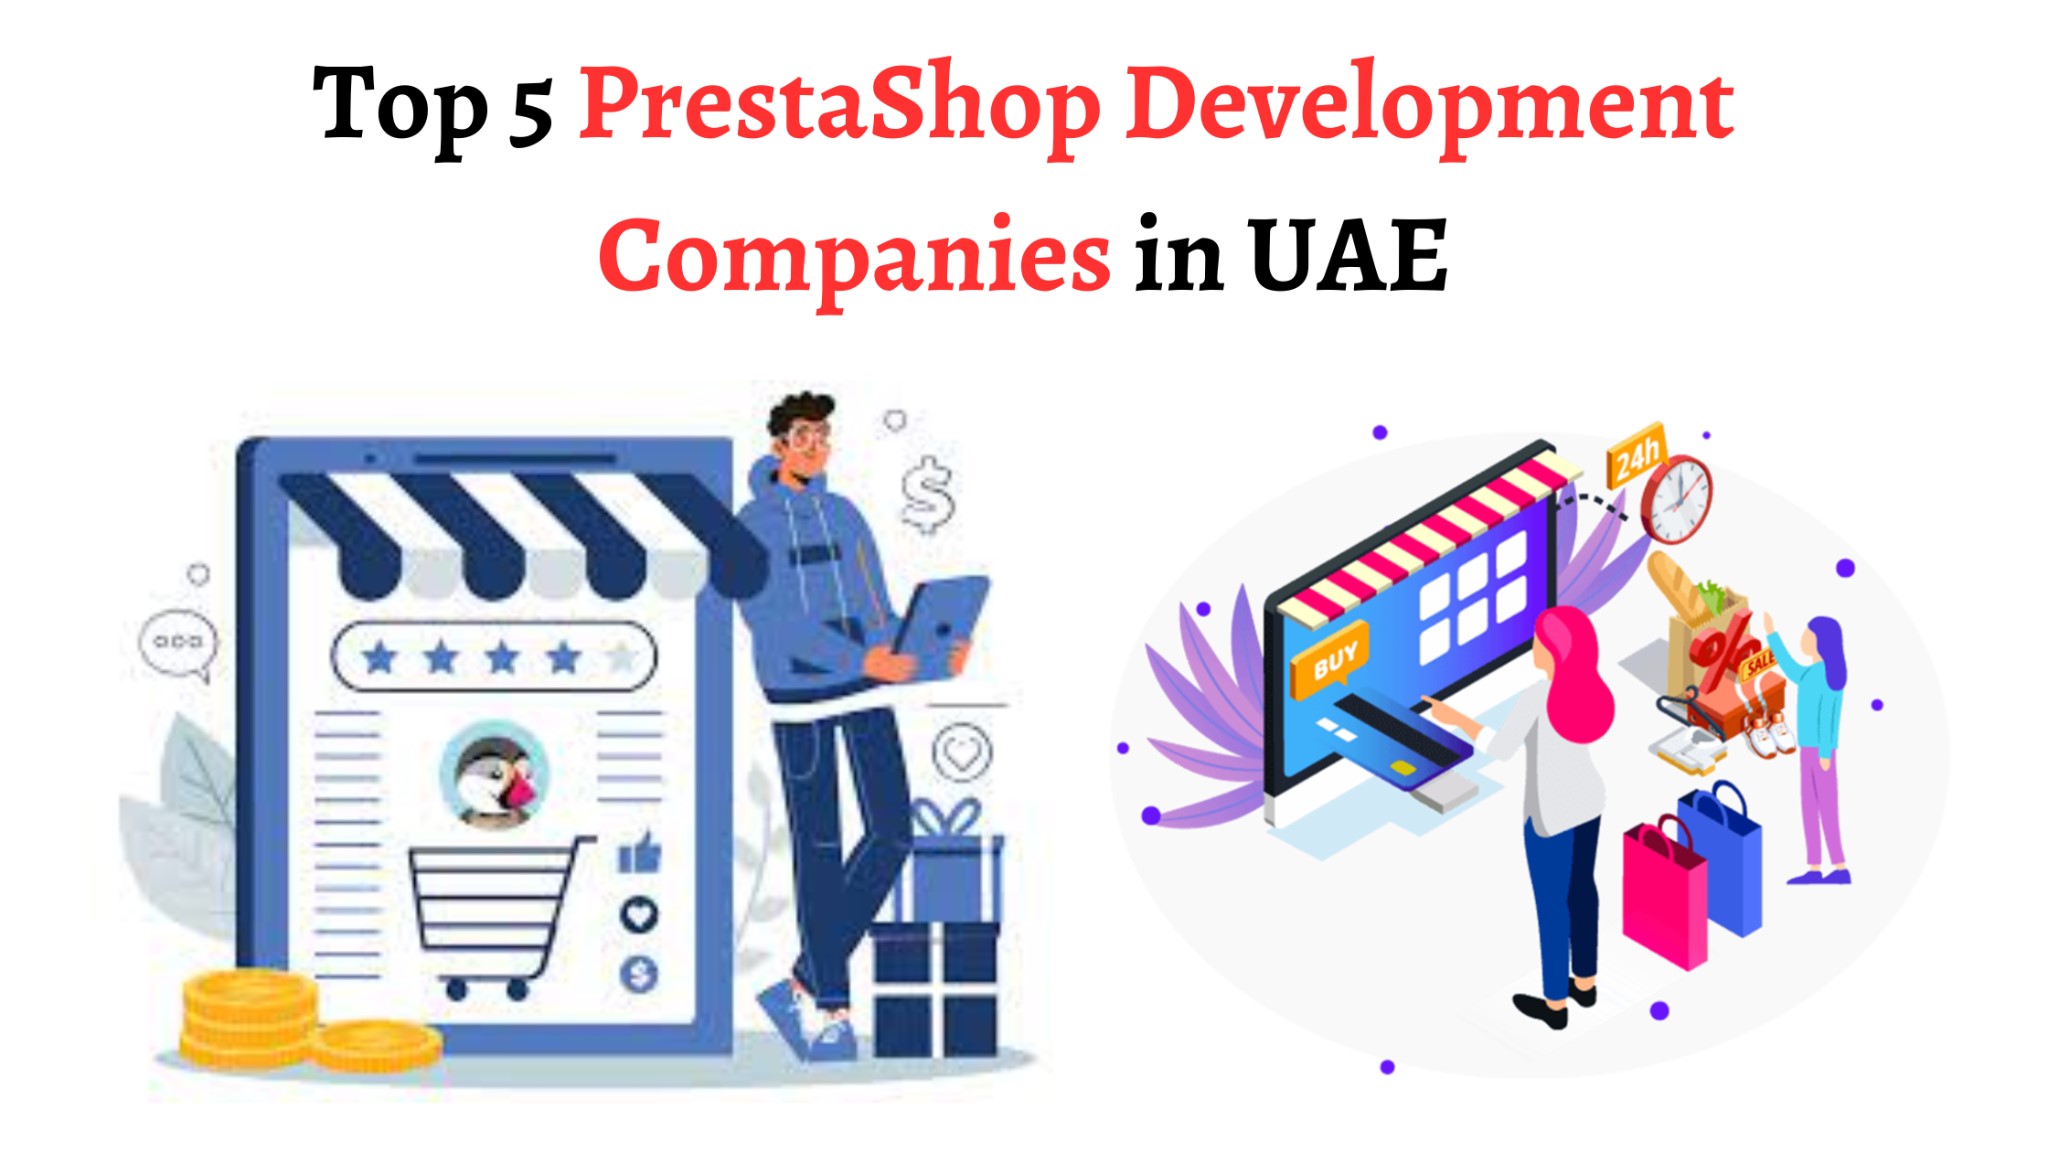 PrestaShop Development Companies in UAE